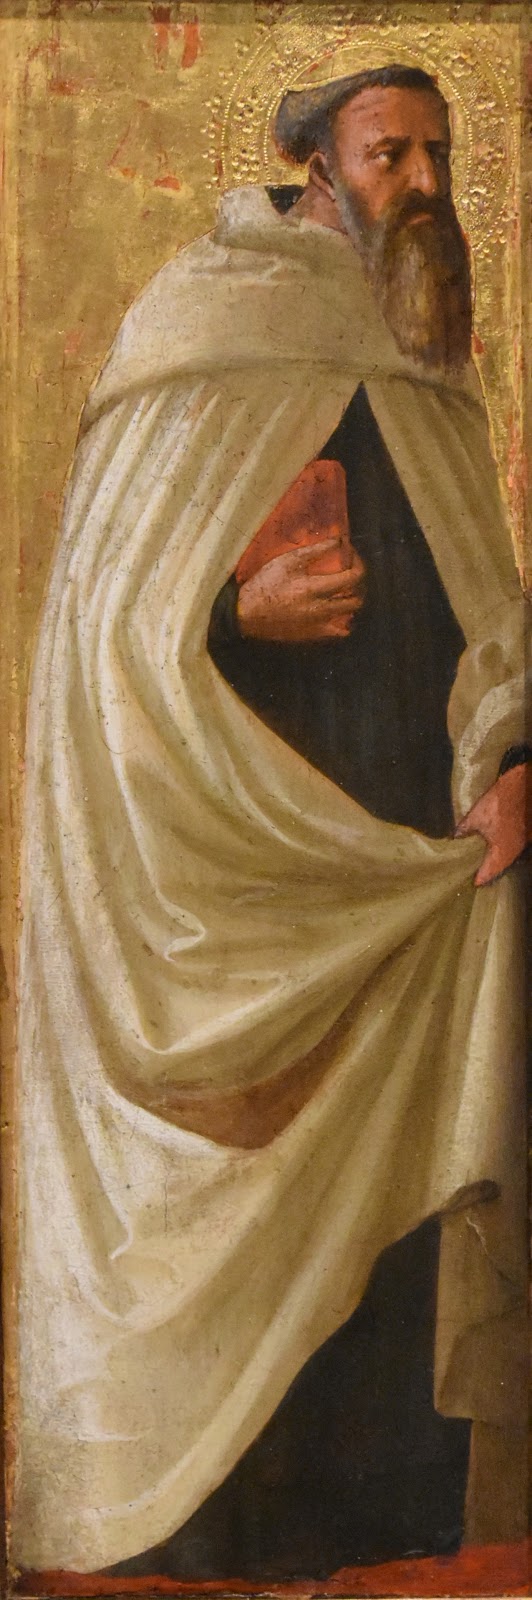 Masaccio-1401-1428 (8).jpg